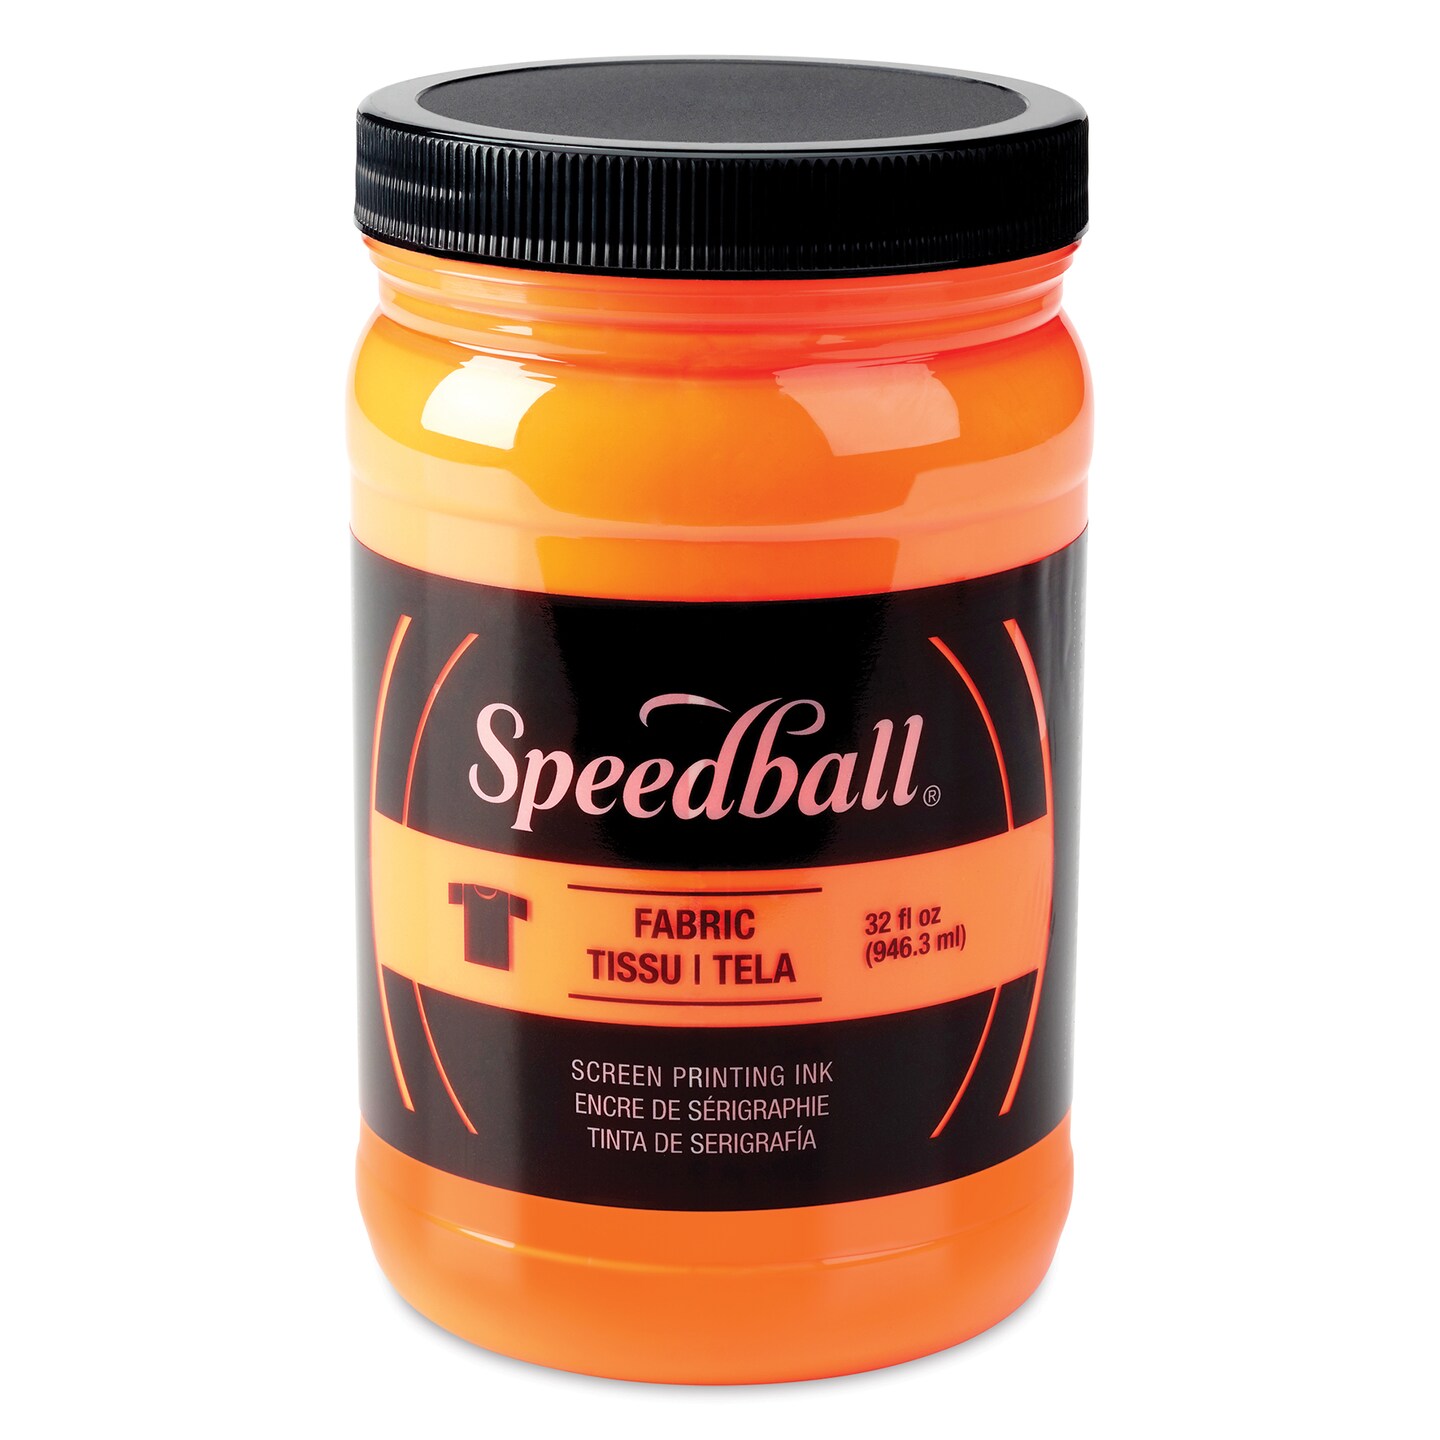 Speedball Fabric Screen Printing Ink - Fluorescent Orange, 32 oz, Jar